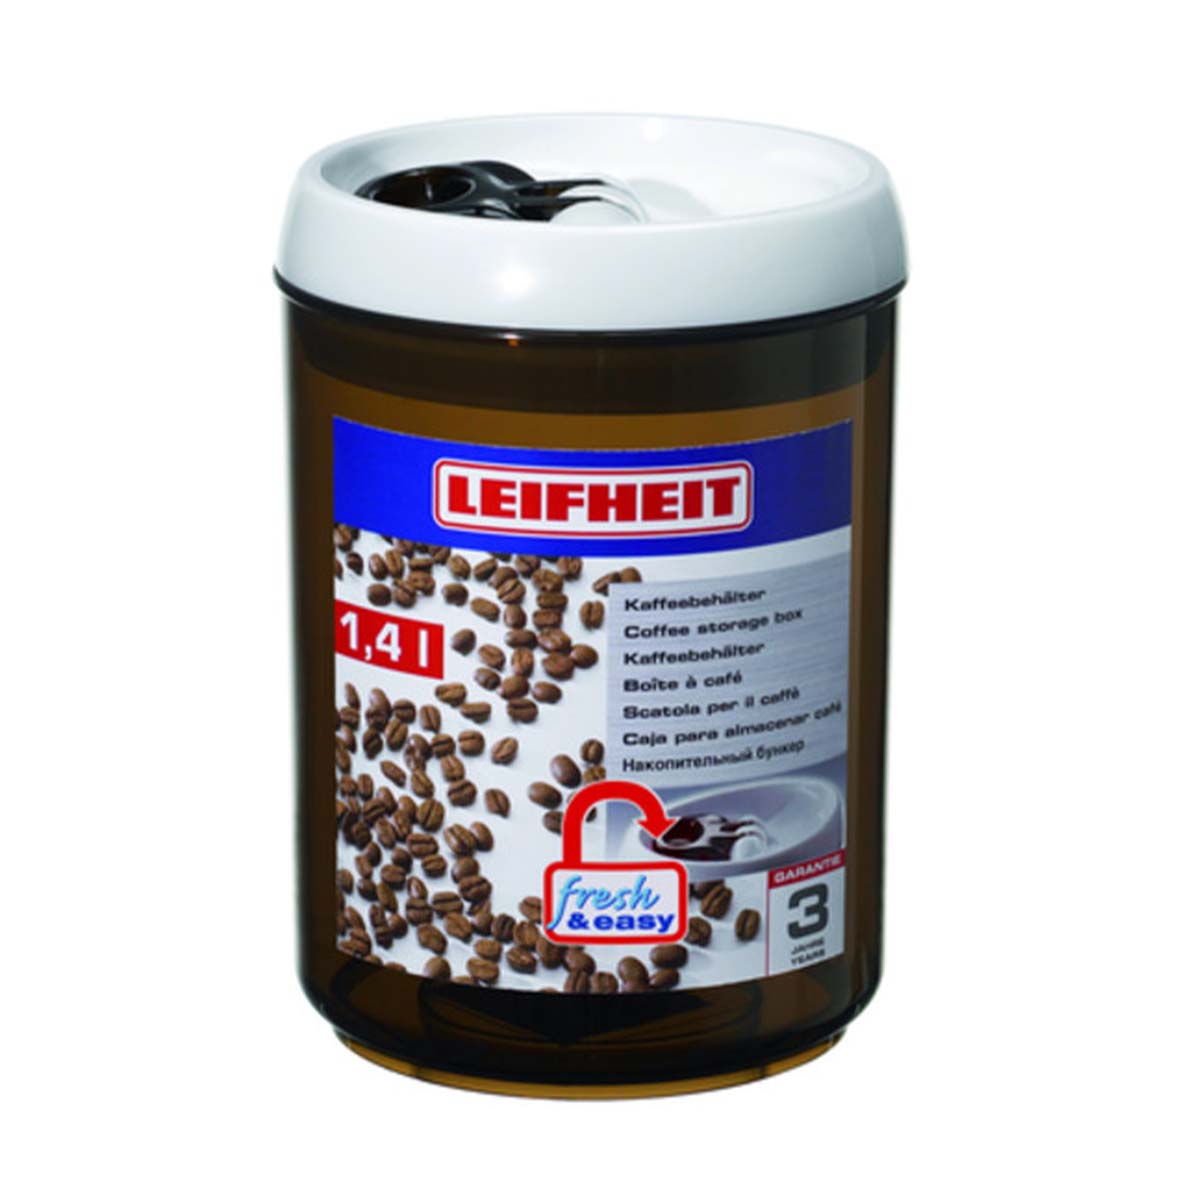 LEIFHEIT Fresh & Easy Coffee Storage Container Round 1400ml L31205